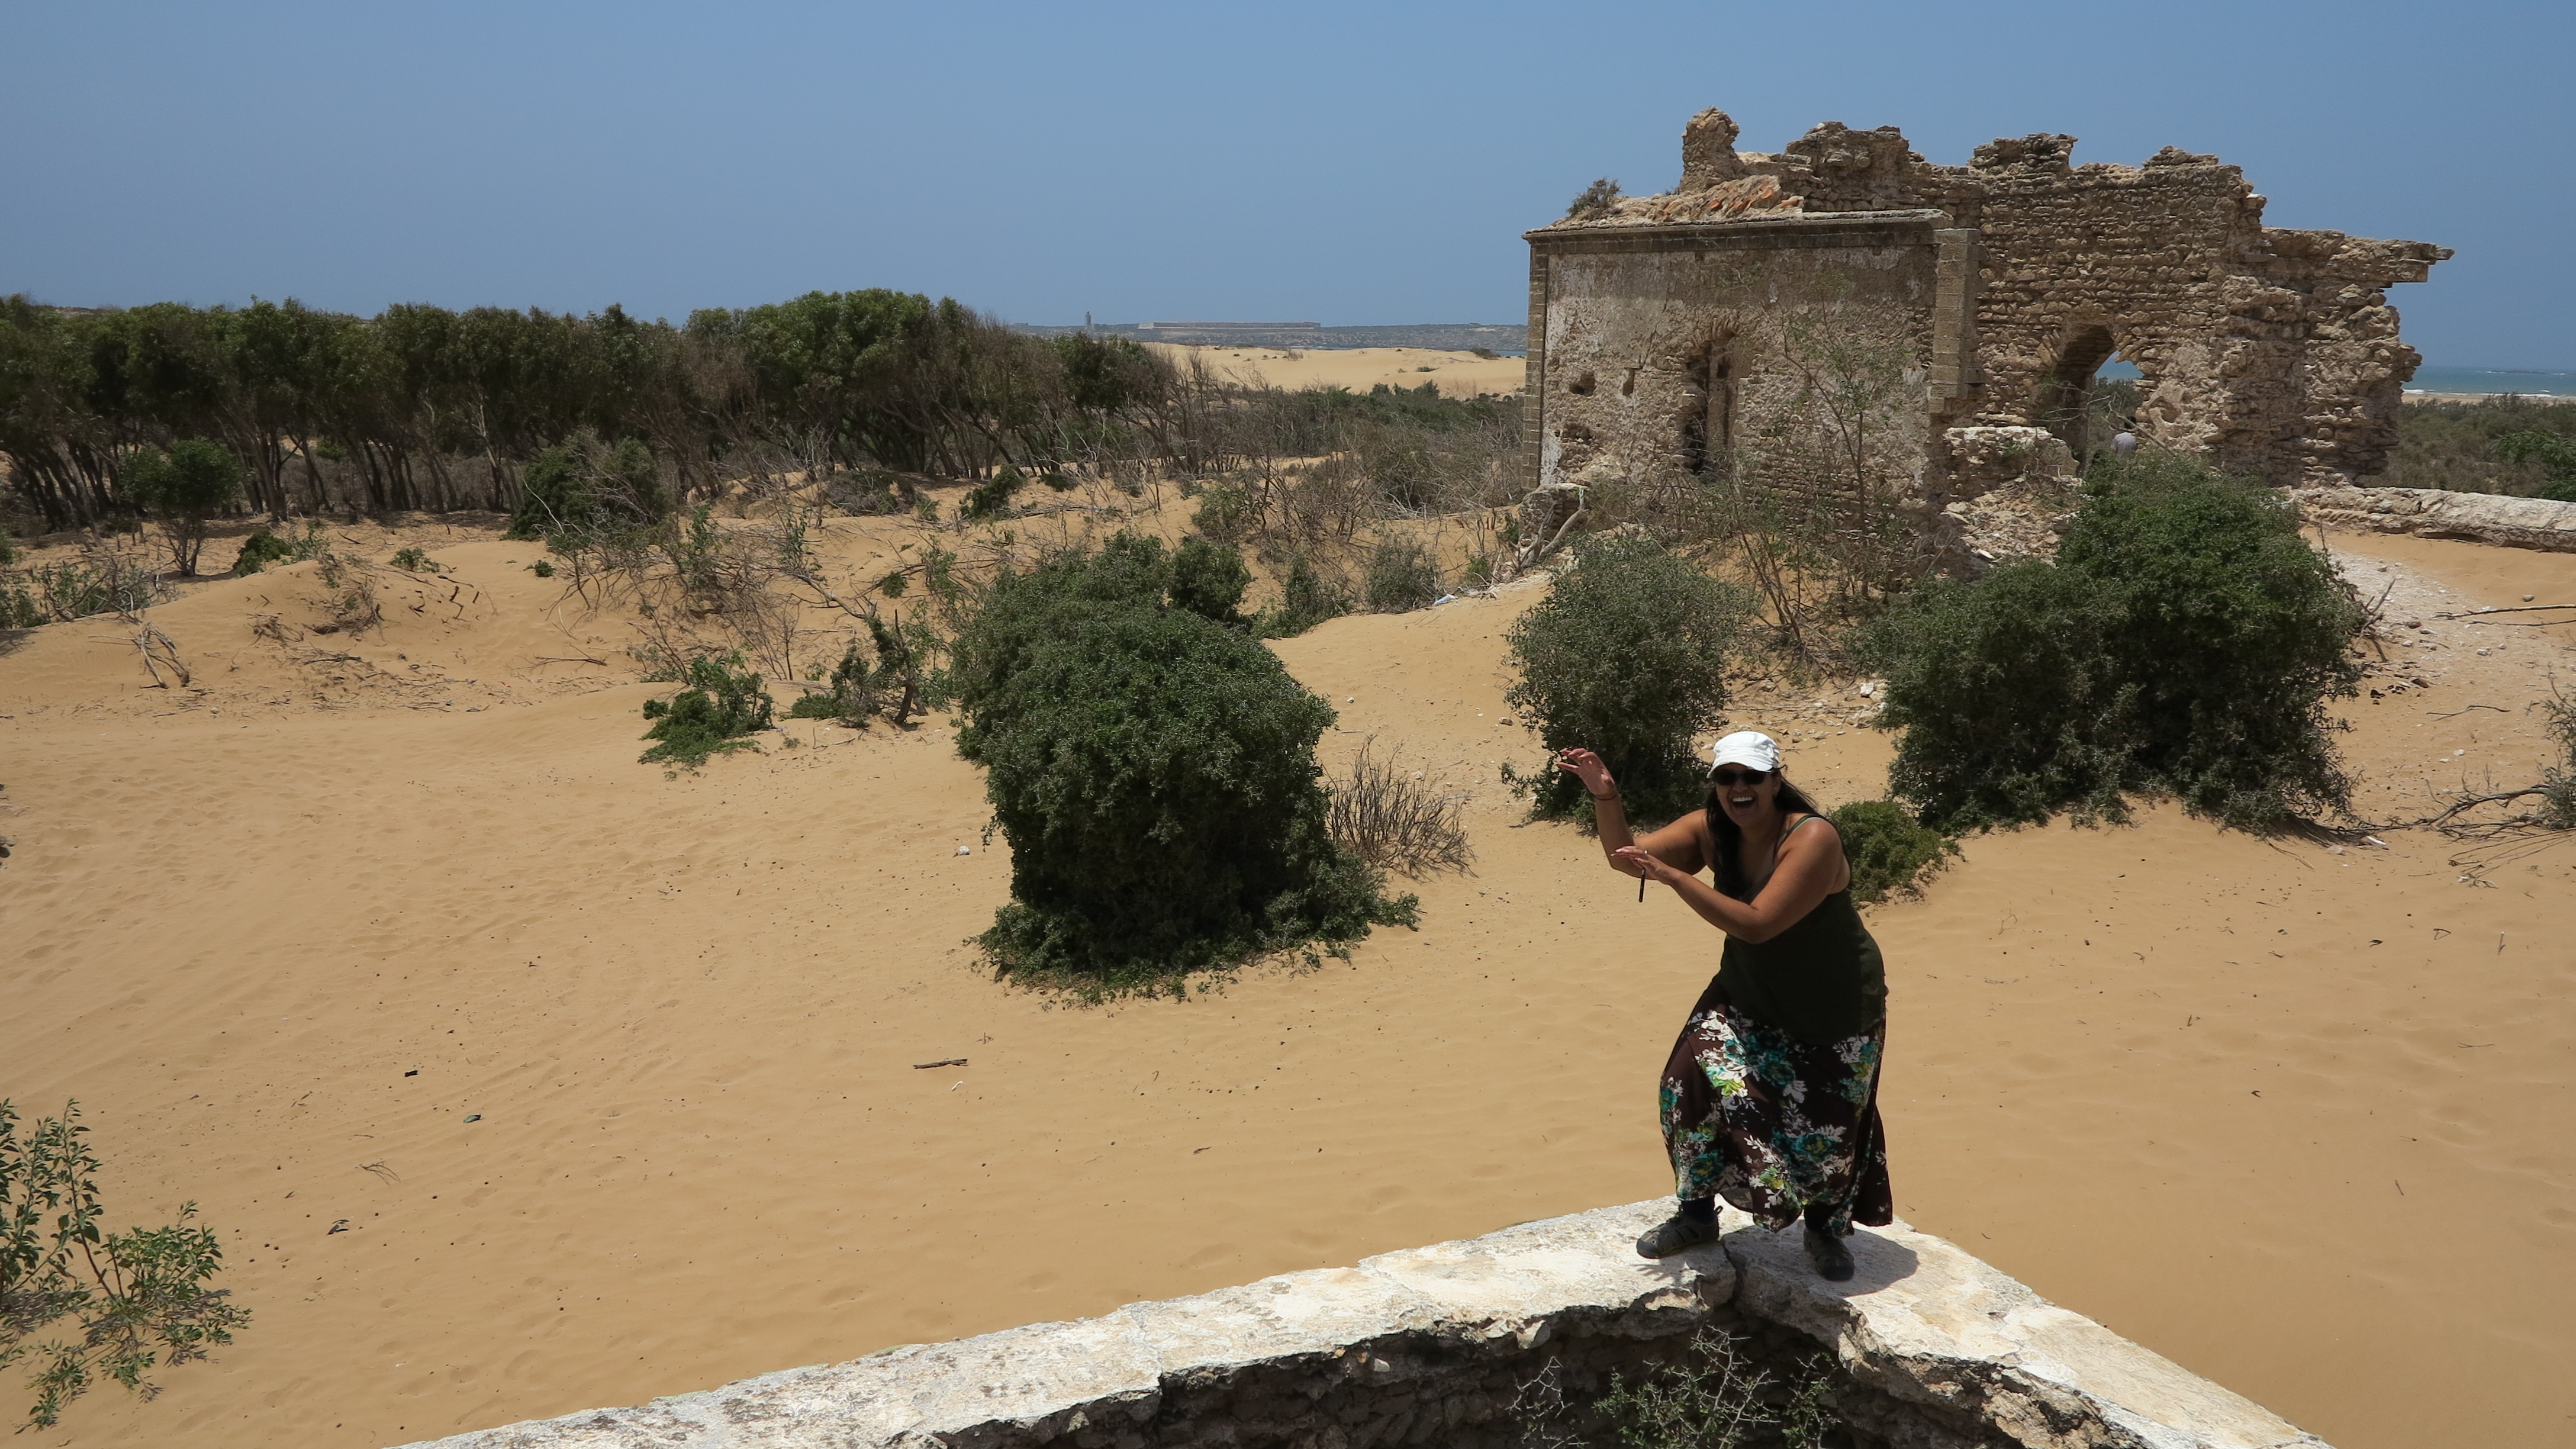 2014.6.15 IMG_5365 Roaaawr - SJ at Castle, Essaouira, Morocco 3670x2448